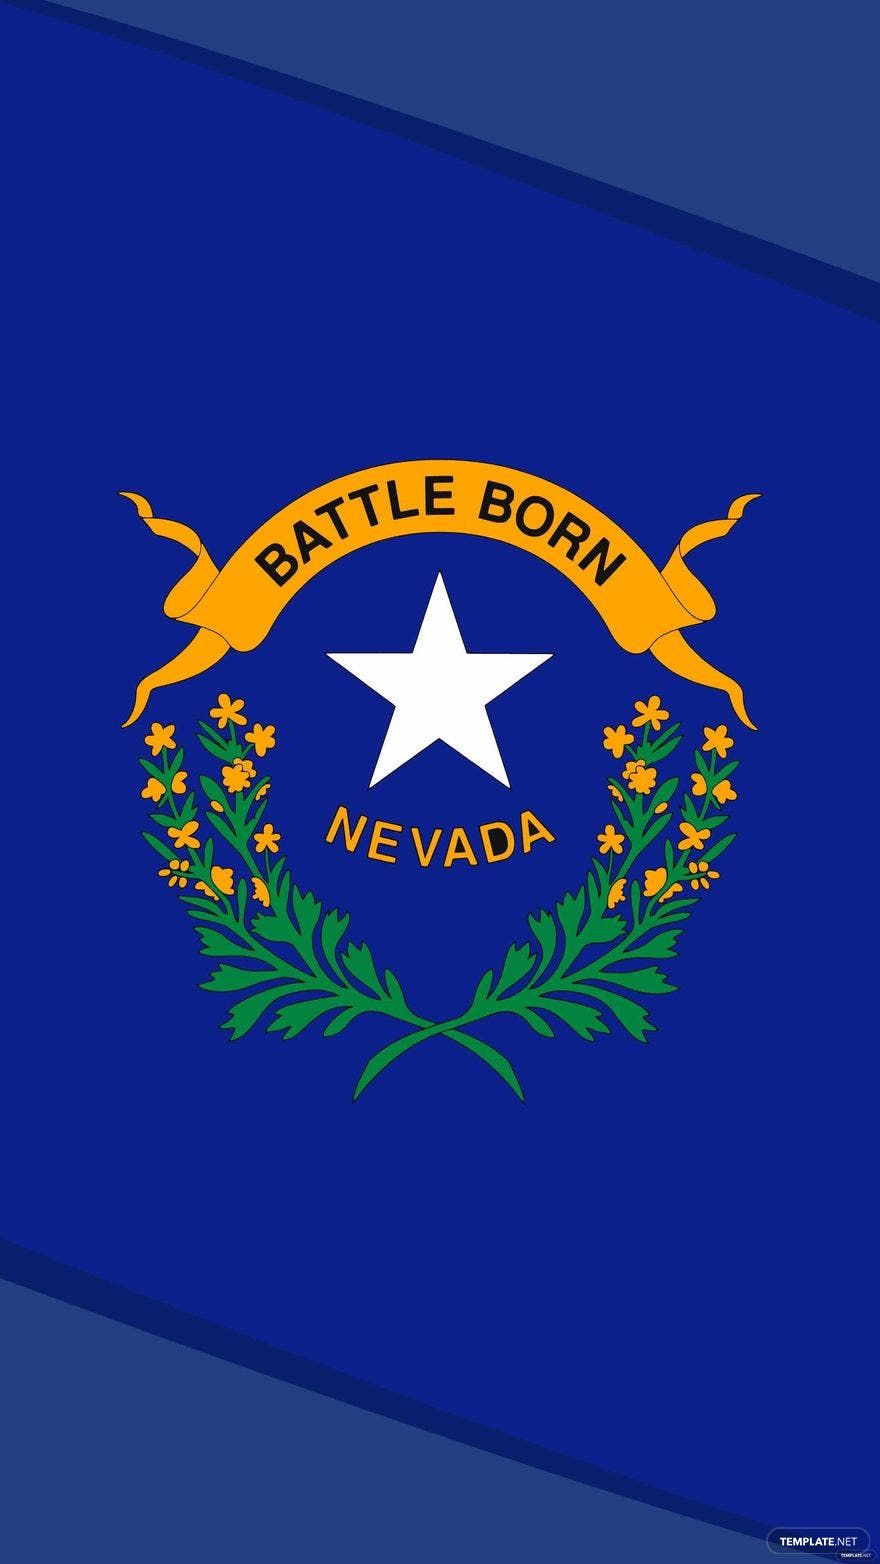 Nevada Day iPhone Background